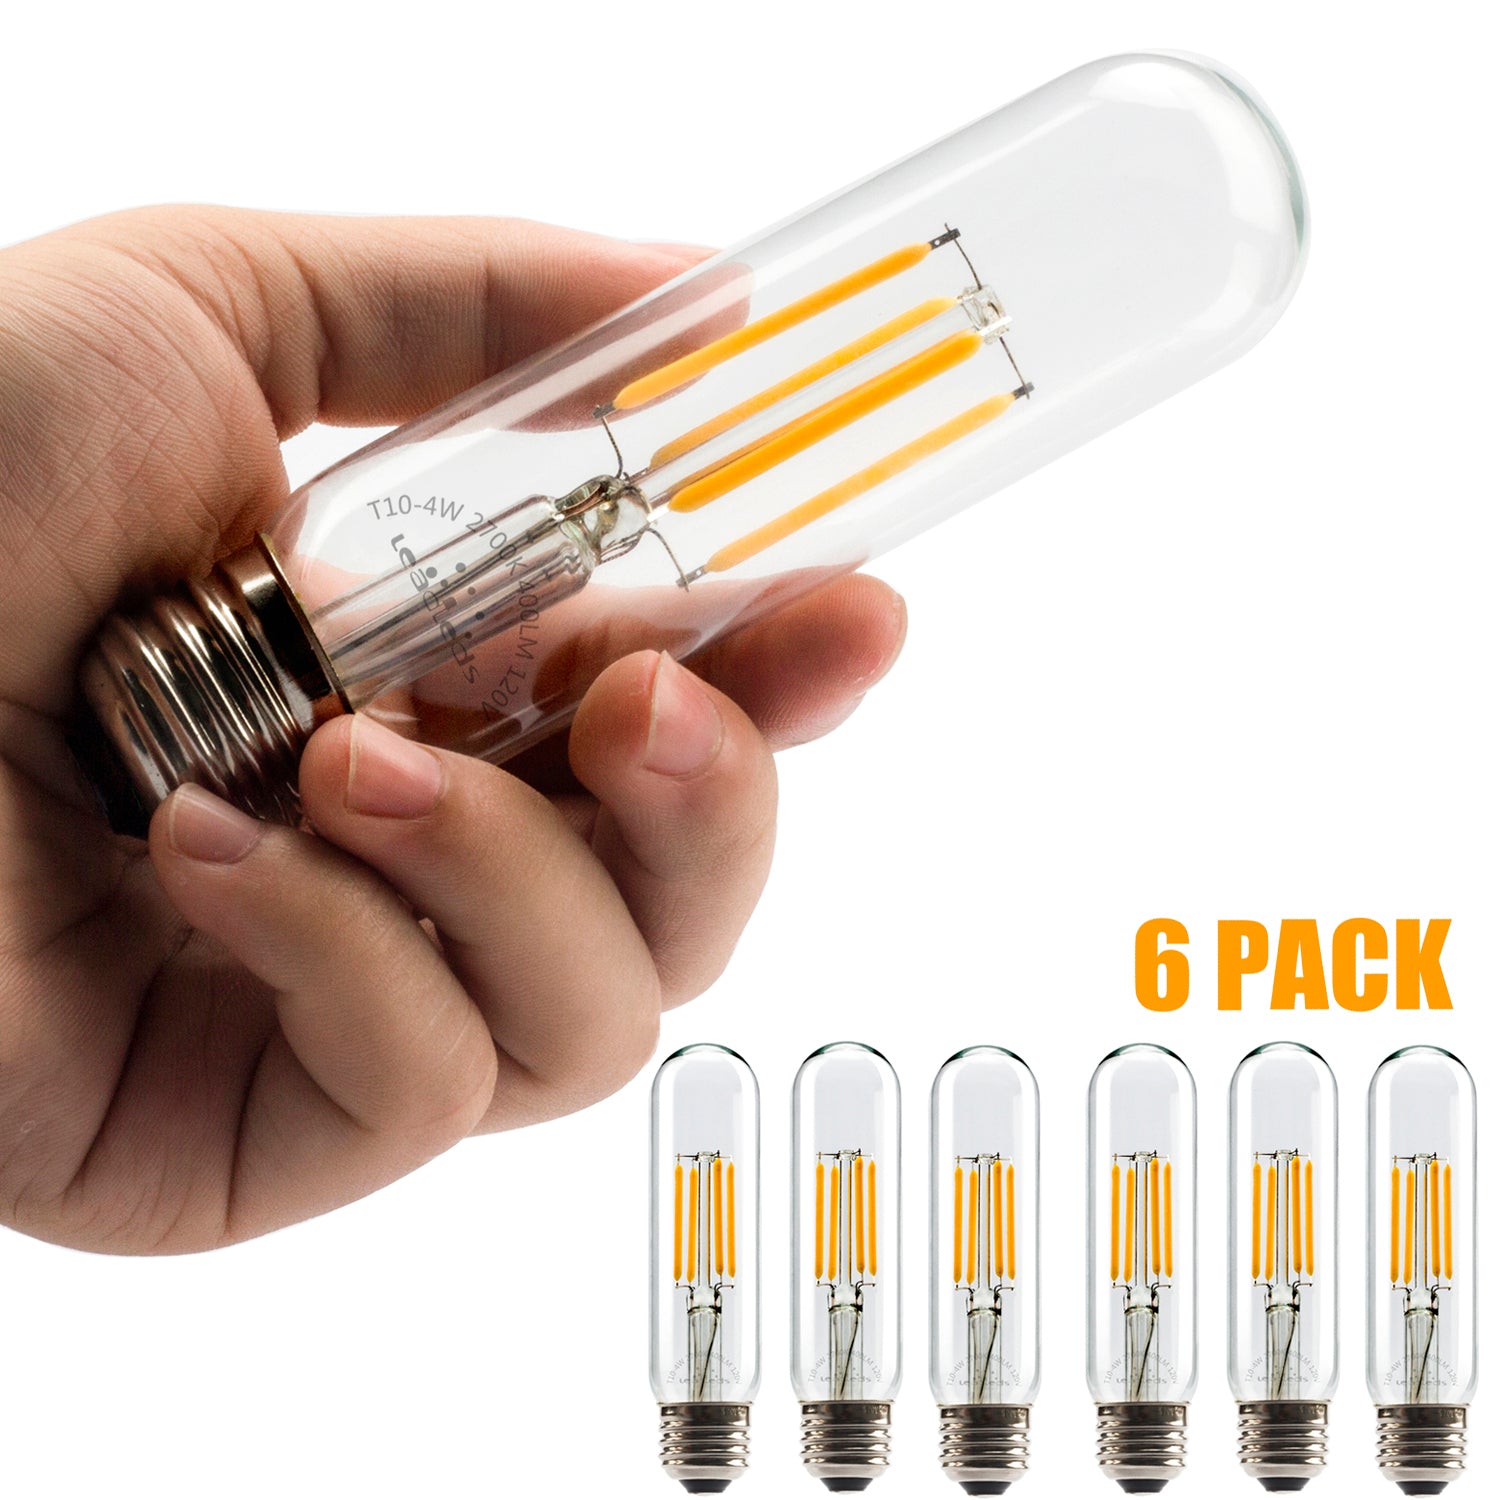 Leadleds LED Edison Bulb 40W Equivalent Non Dimmable E26 LED Lamp T10 Tubular 2700K Neat Warm White - Leadleds